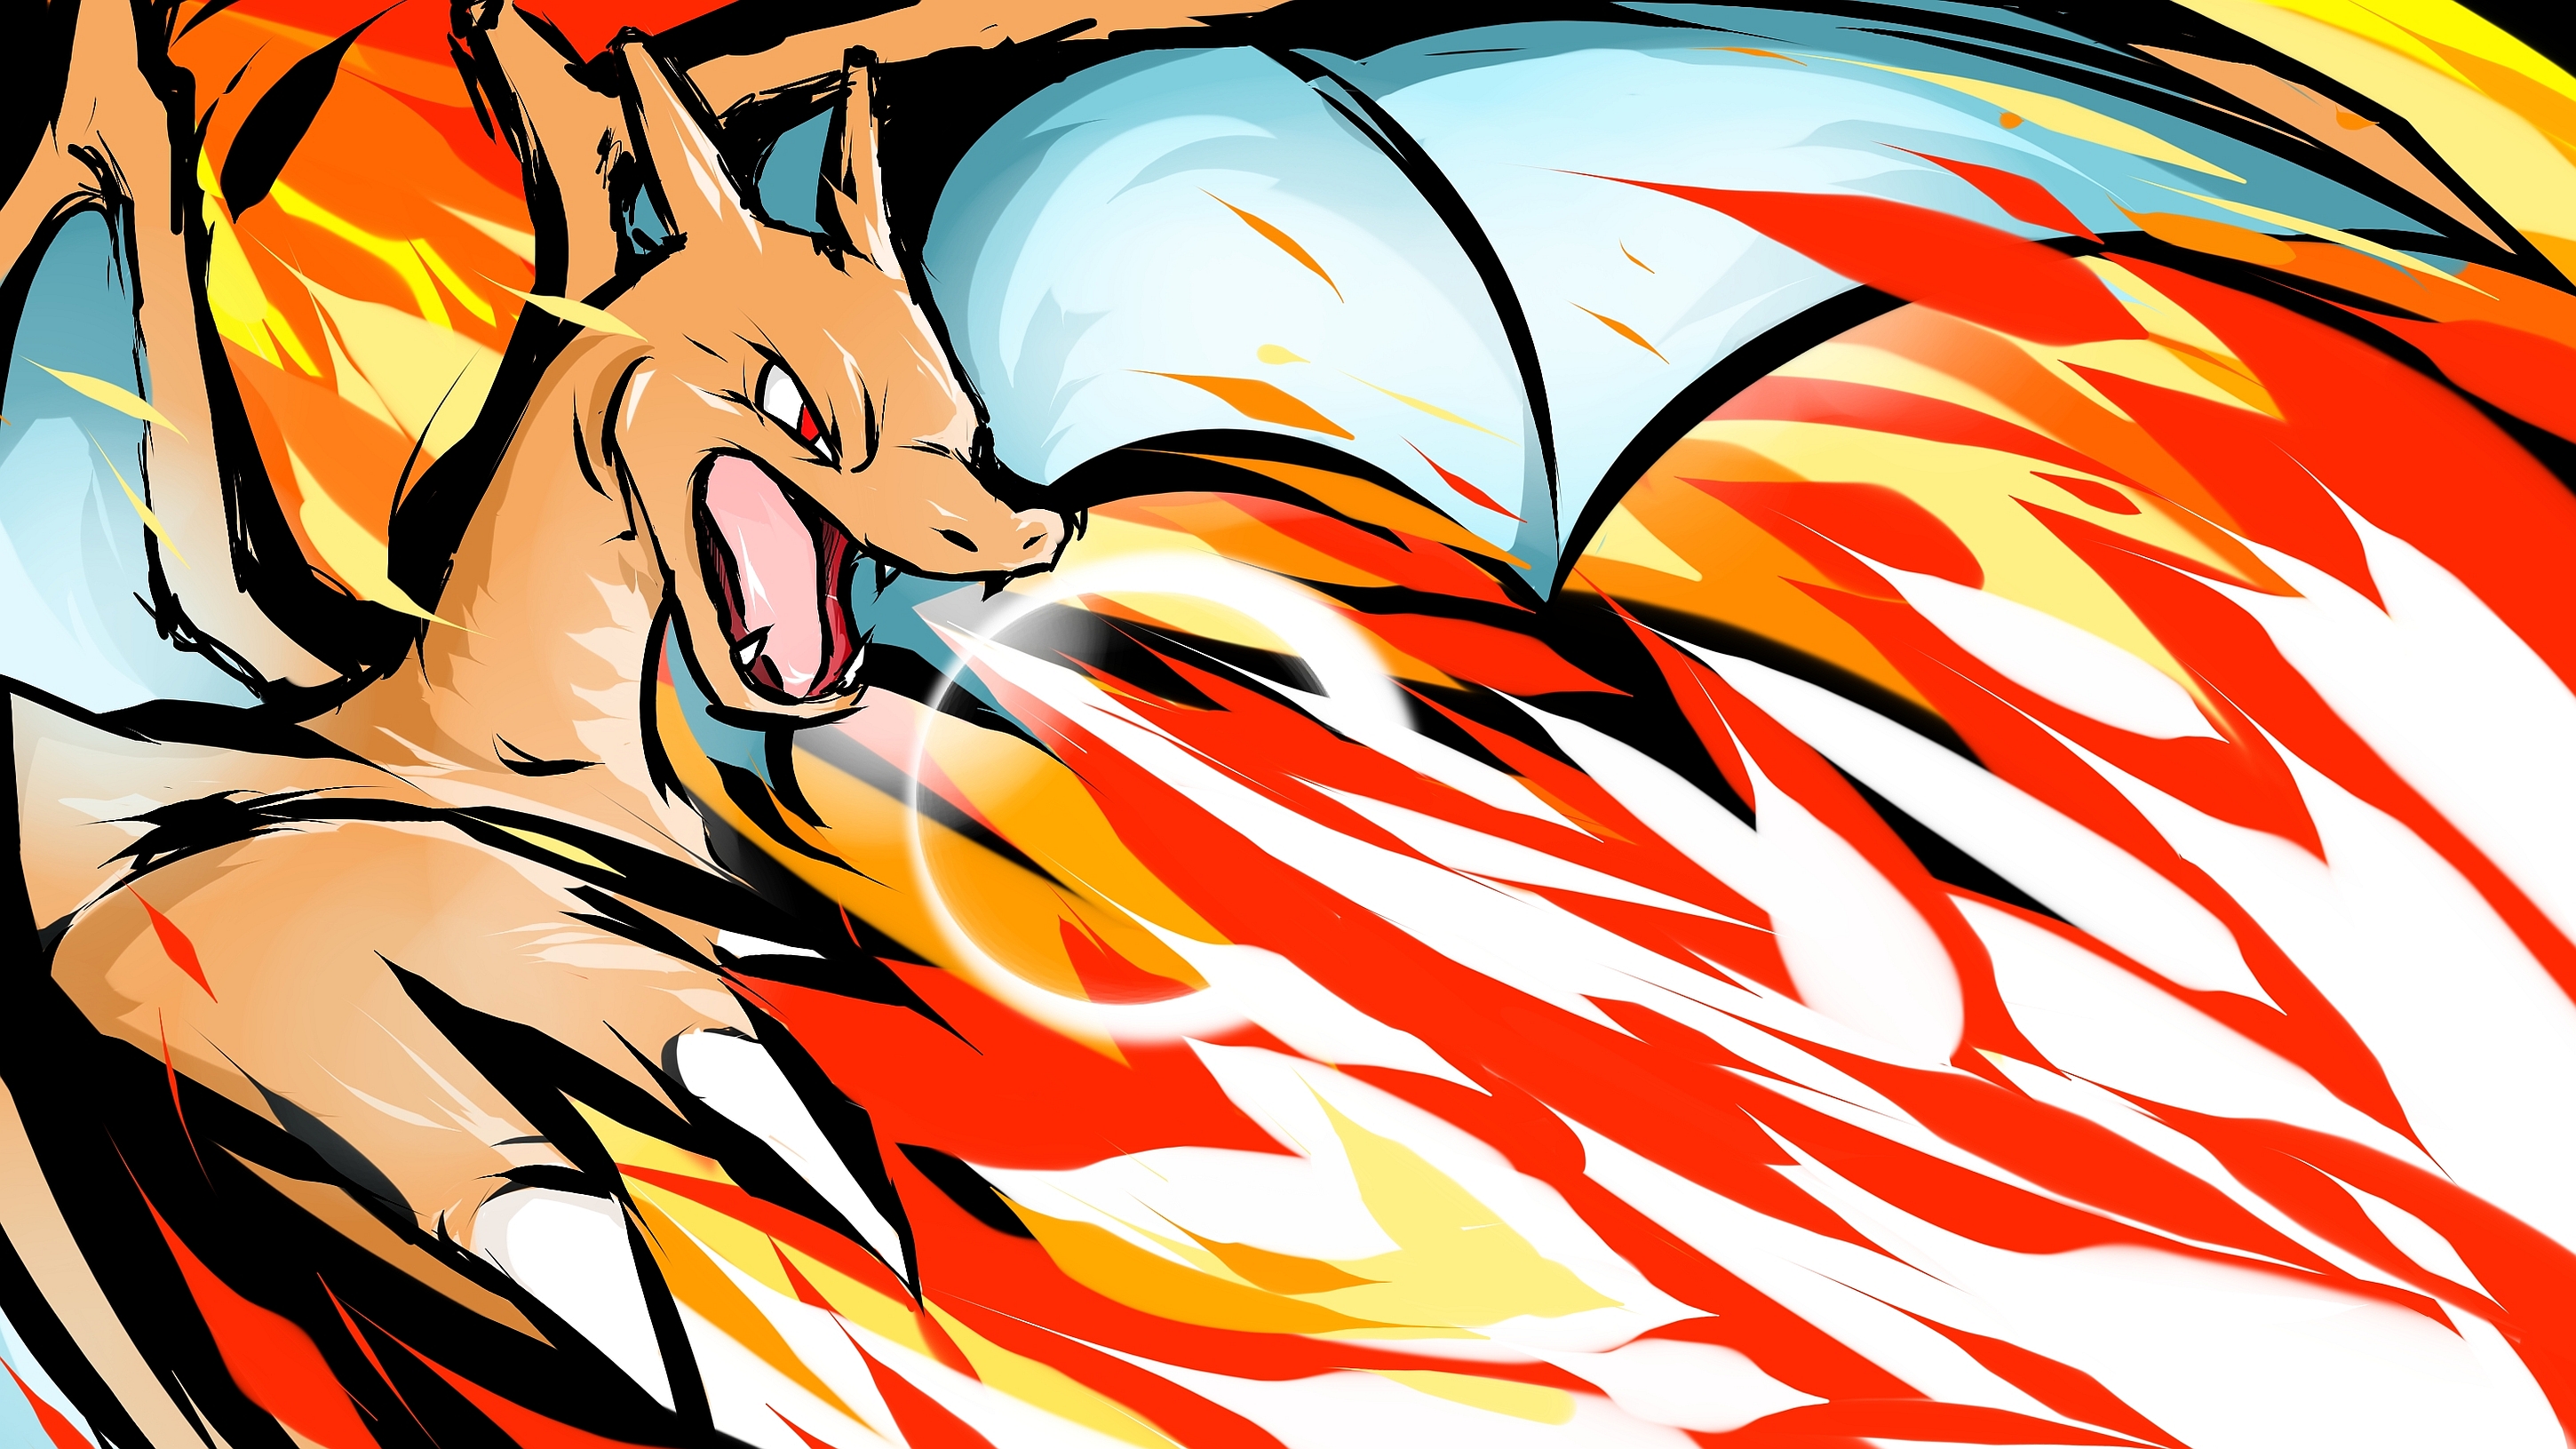 Anime 2900x1631 anime Pokémon Charizard fire dragon